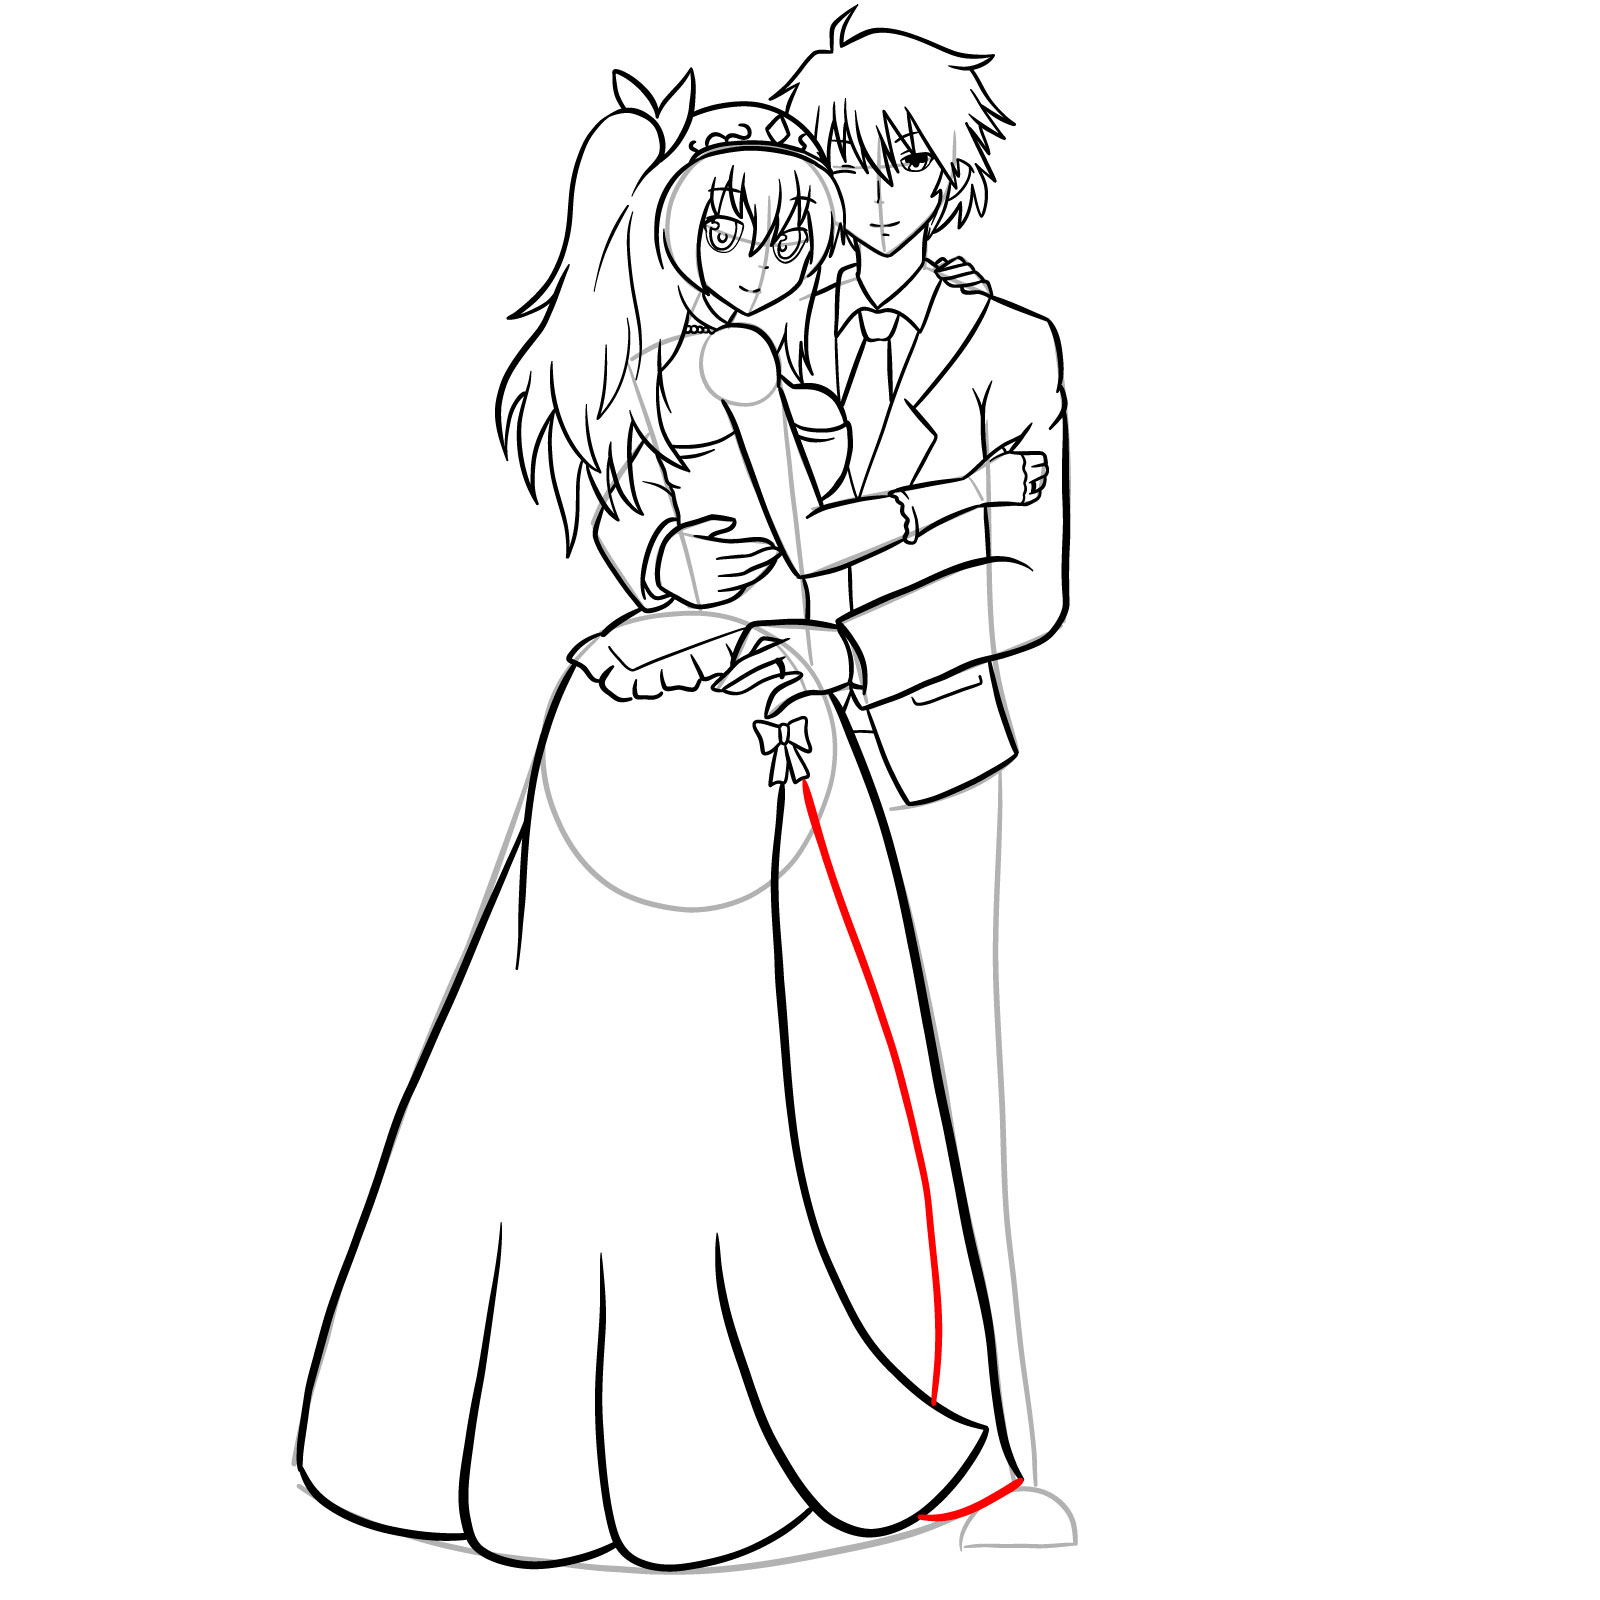 How to draw Ikki and Stella's wedding - step 51